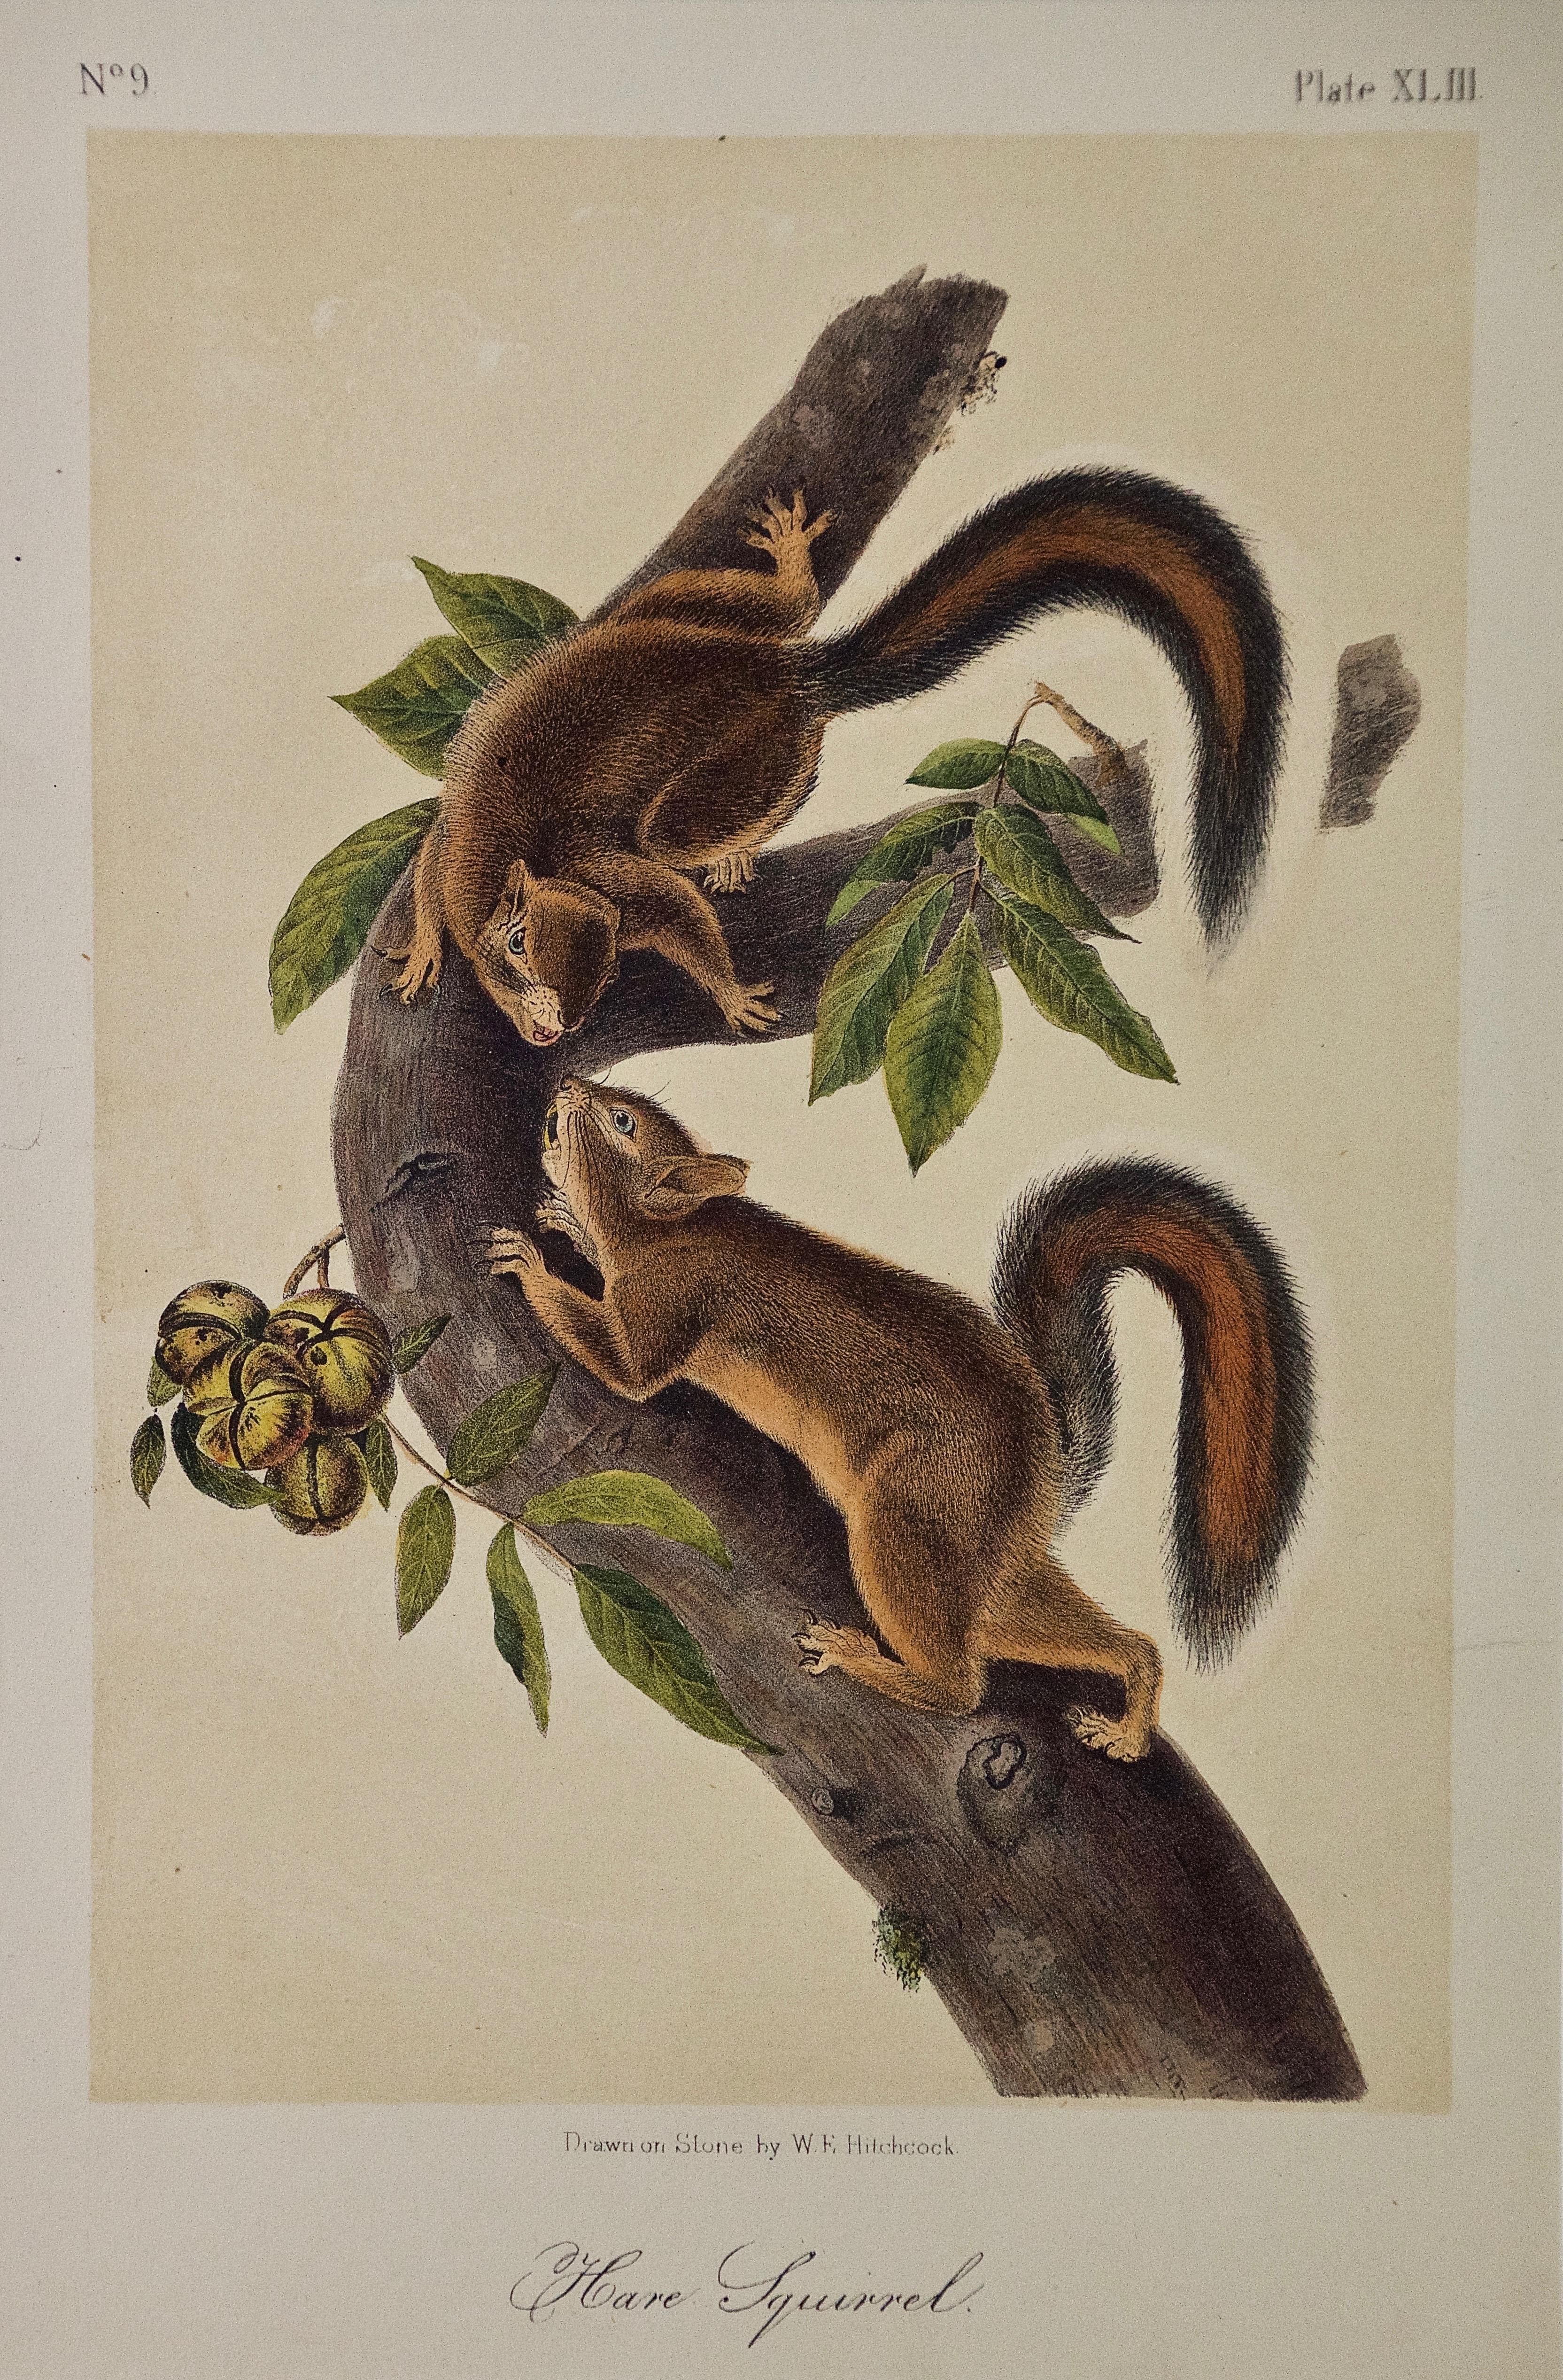 John James Audubon Animal Print - Original Audubon Hand Colored Lithograph of a "Hare Squirrel"